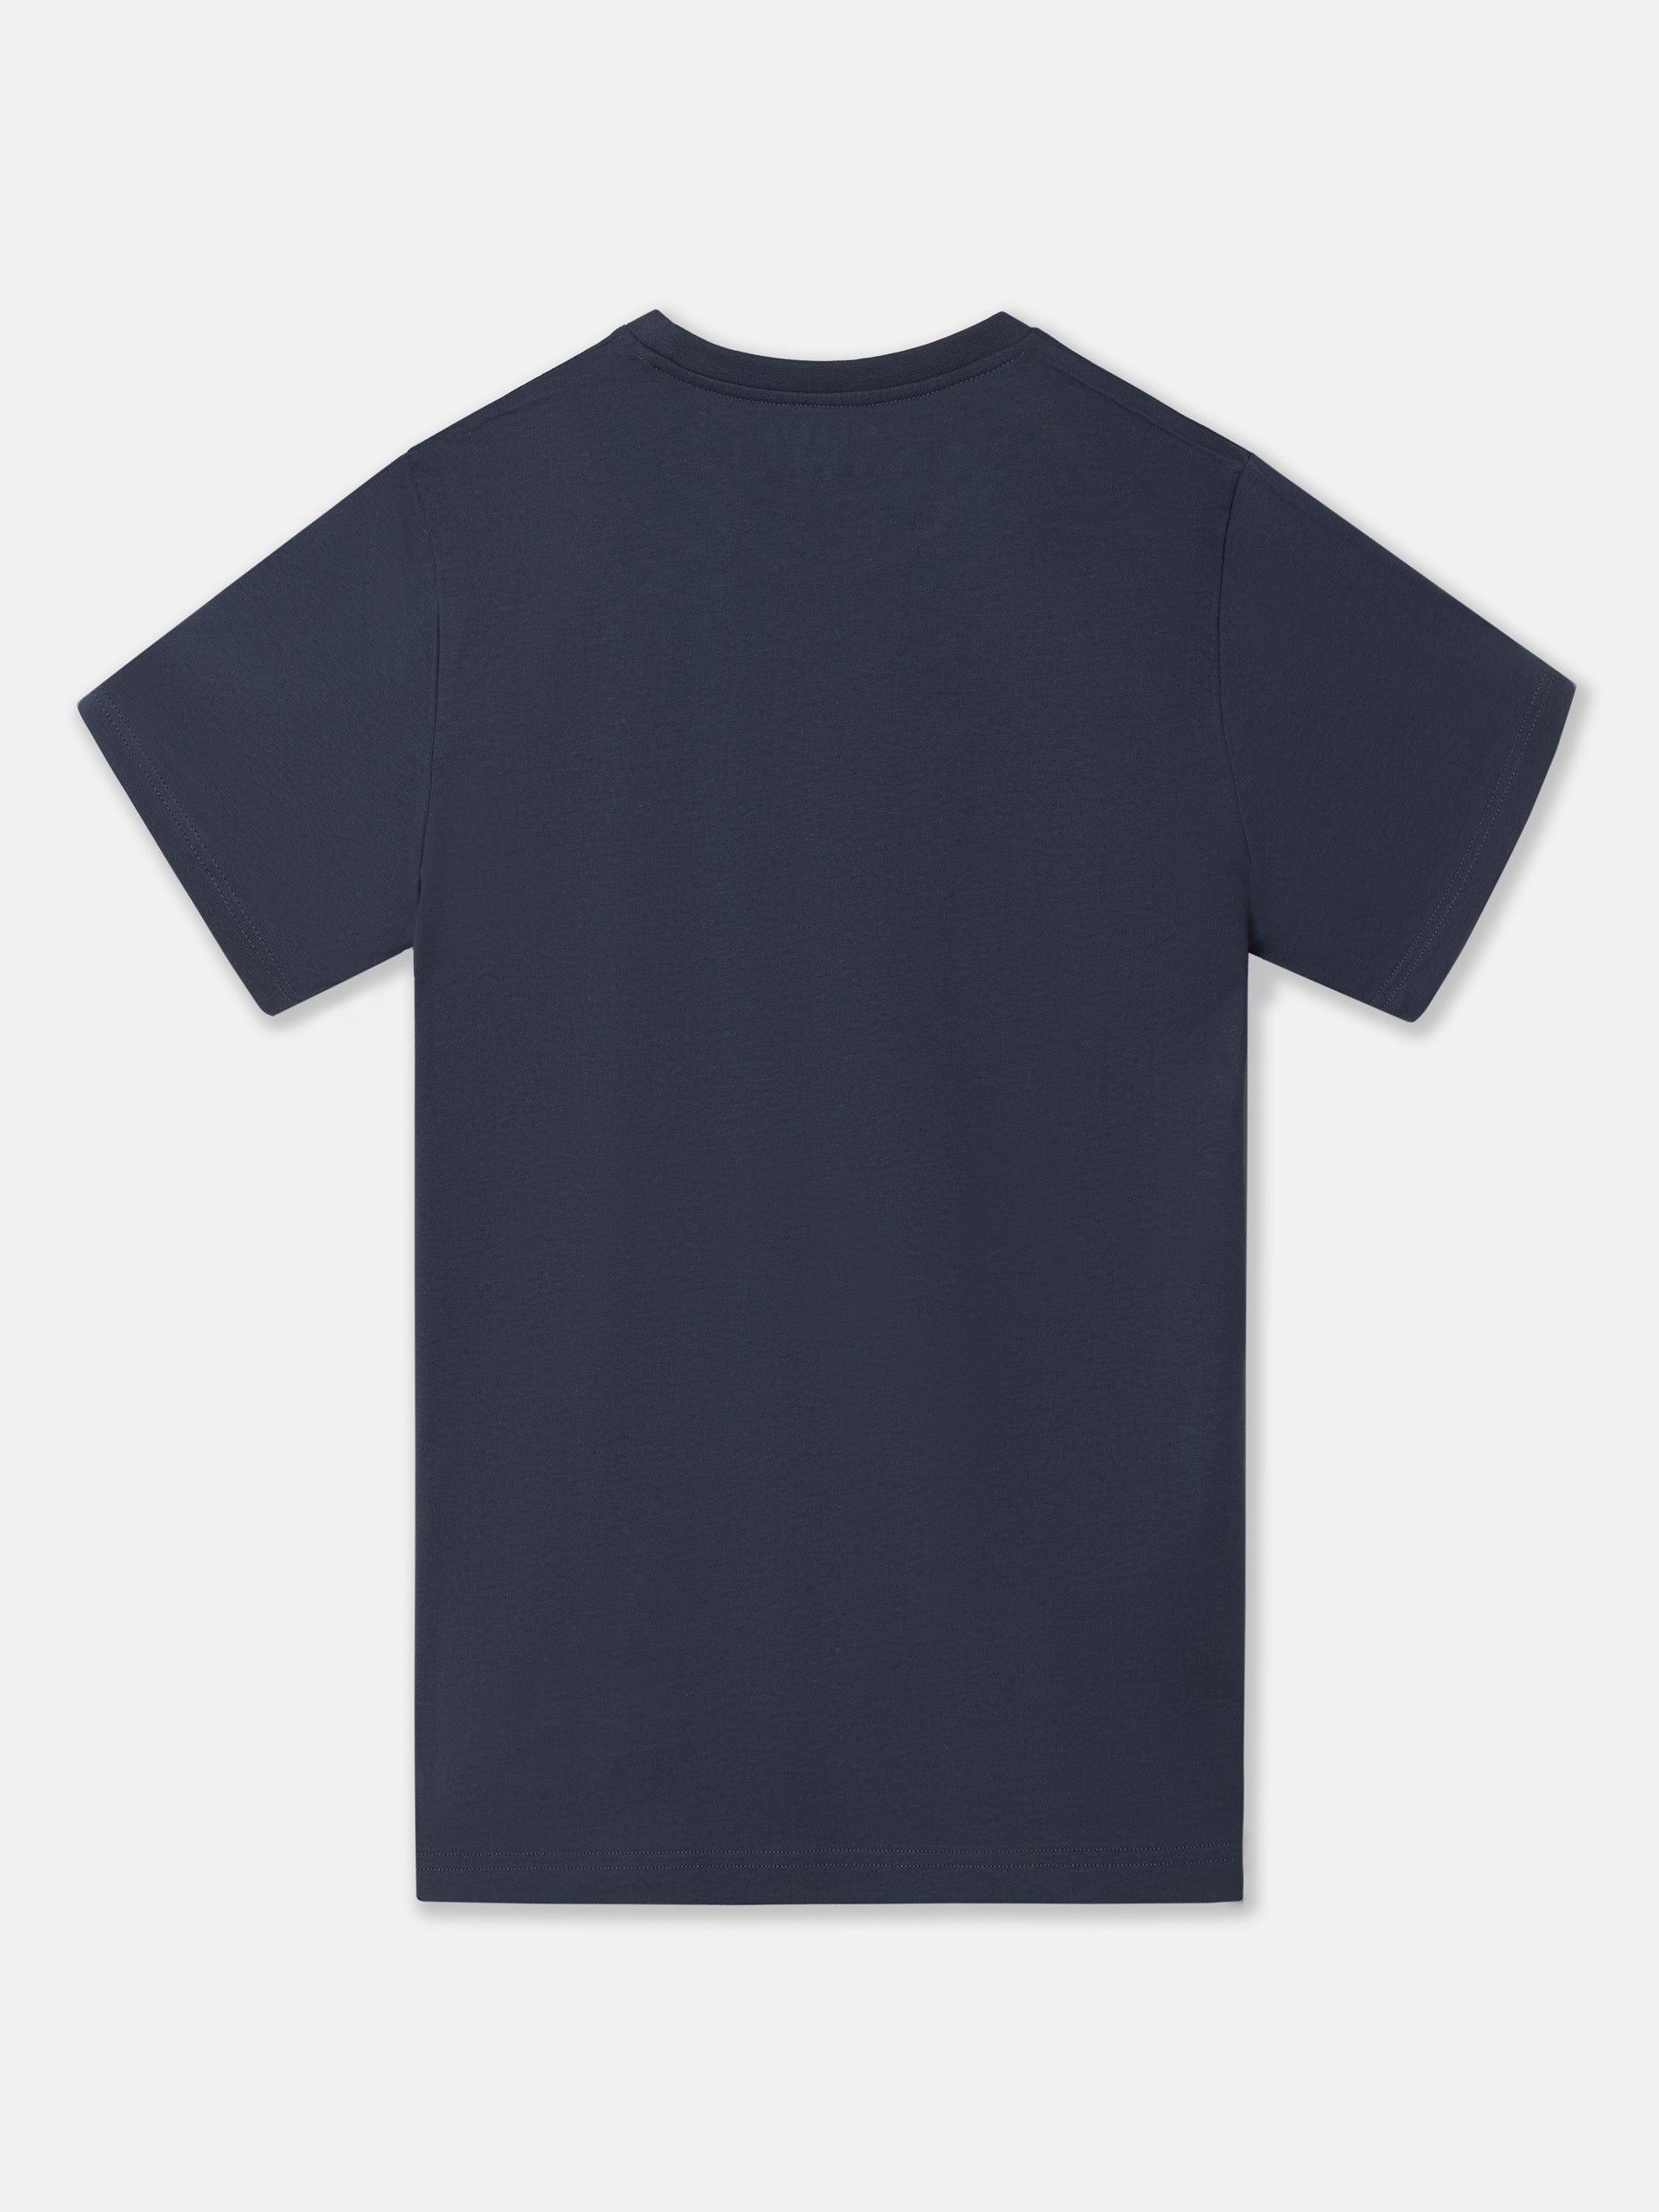 Camiseta silbon raqueta media azul marino